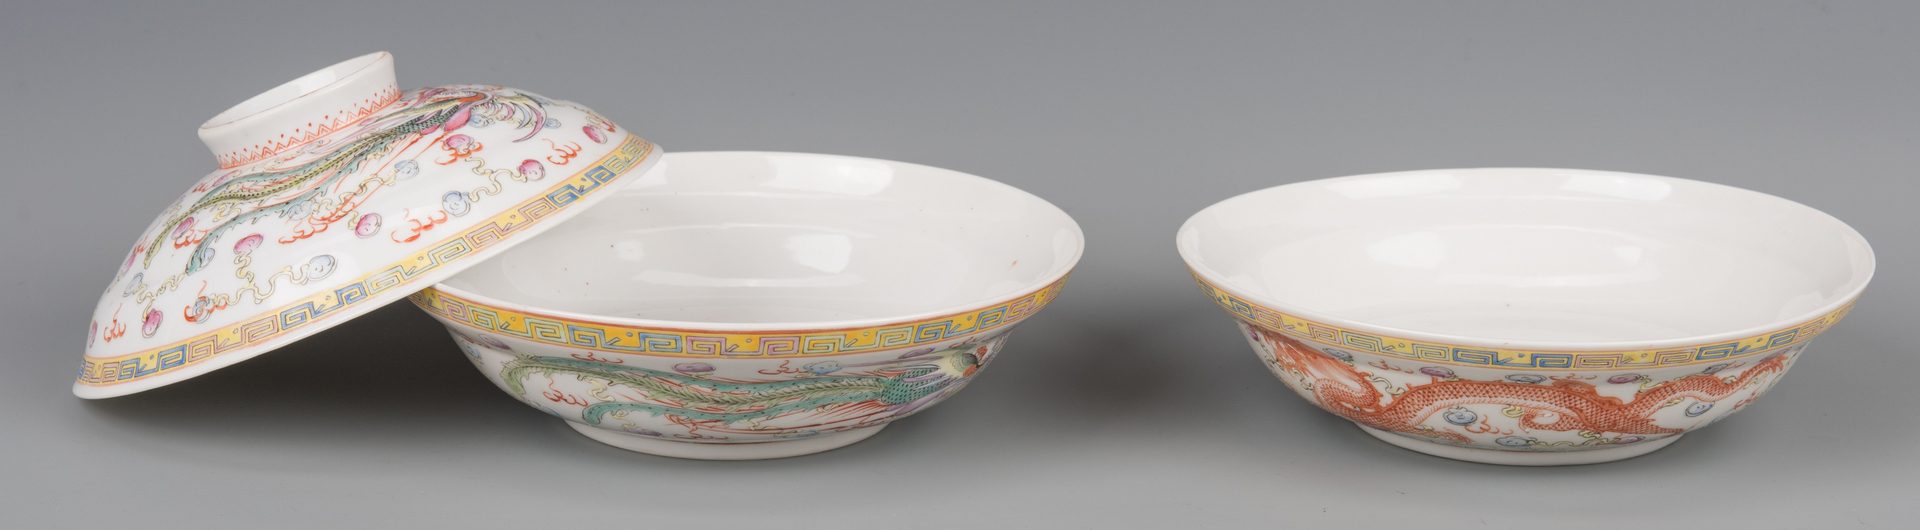 Lot 264: 2 Chinese Porcelain Dragon Bowls